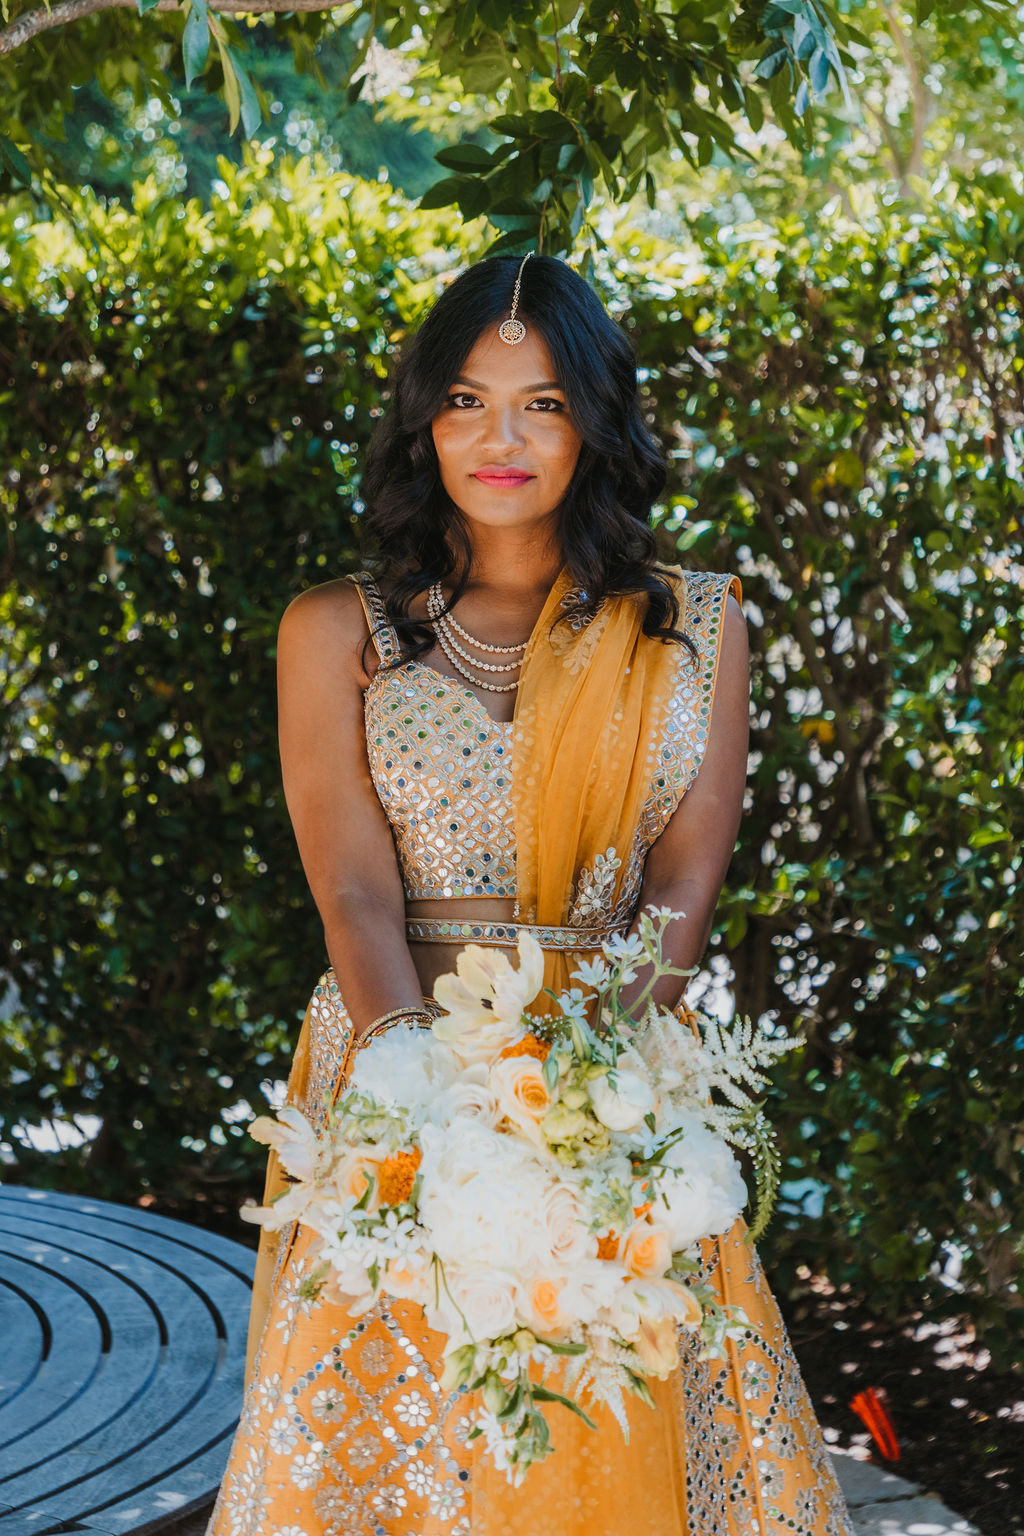 bride in orange marigold colored wedding sari holds bouquet of white and orange flowers